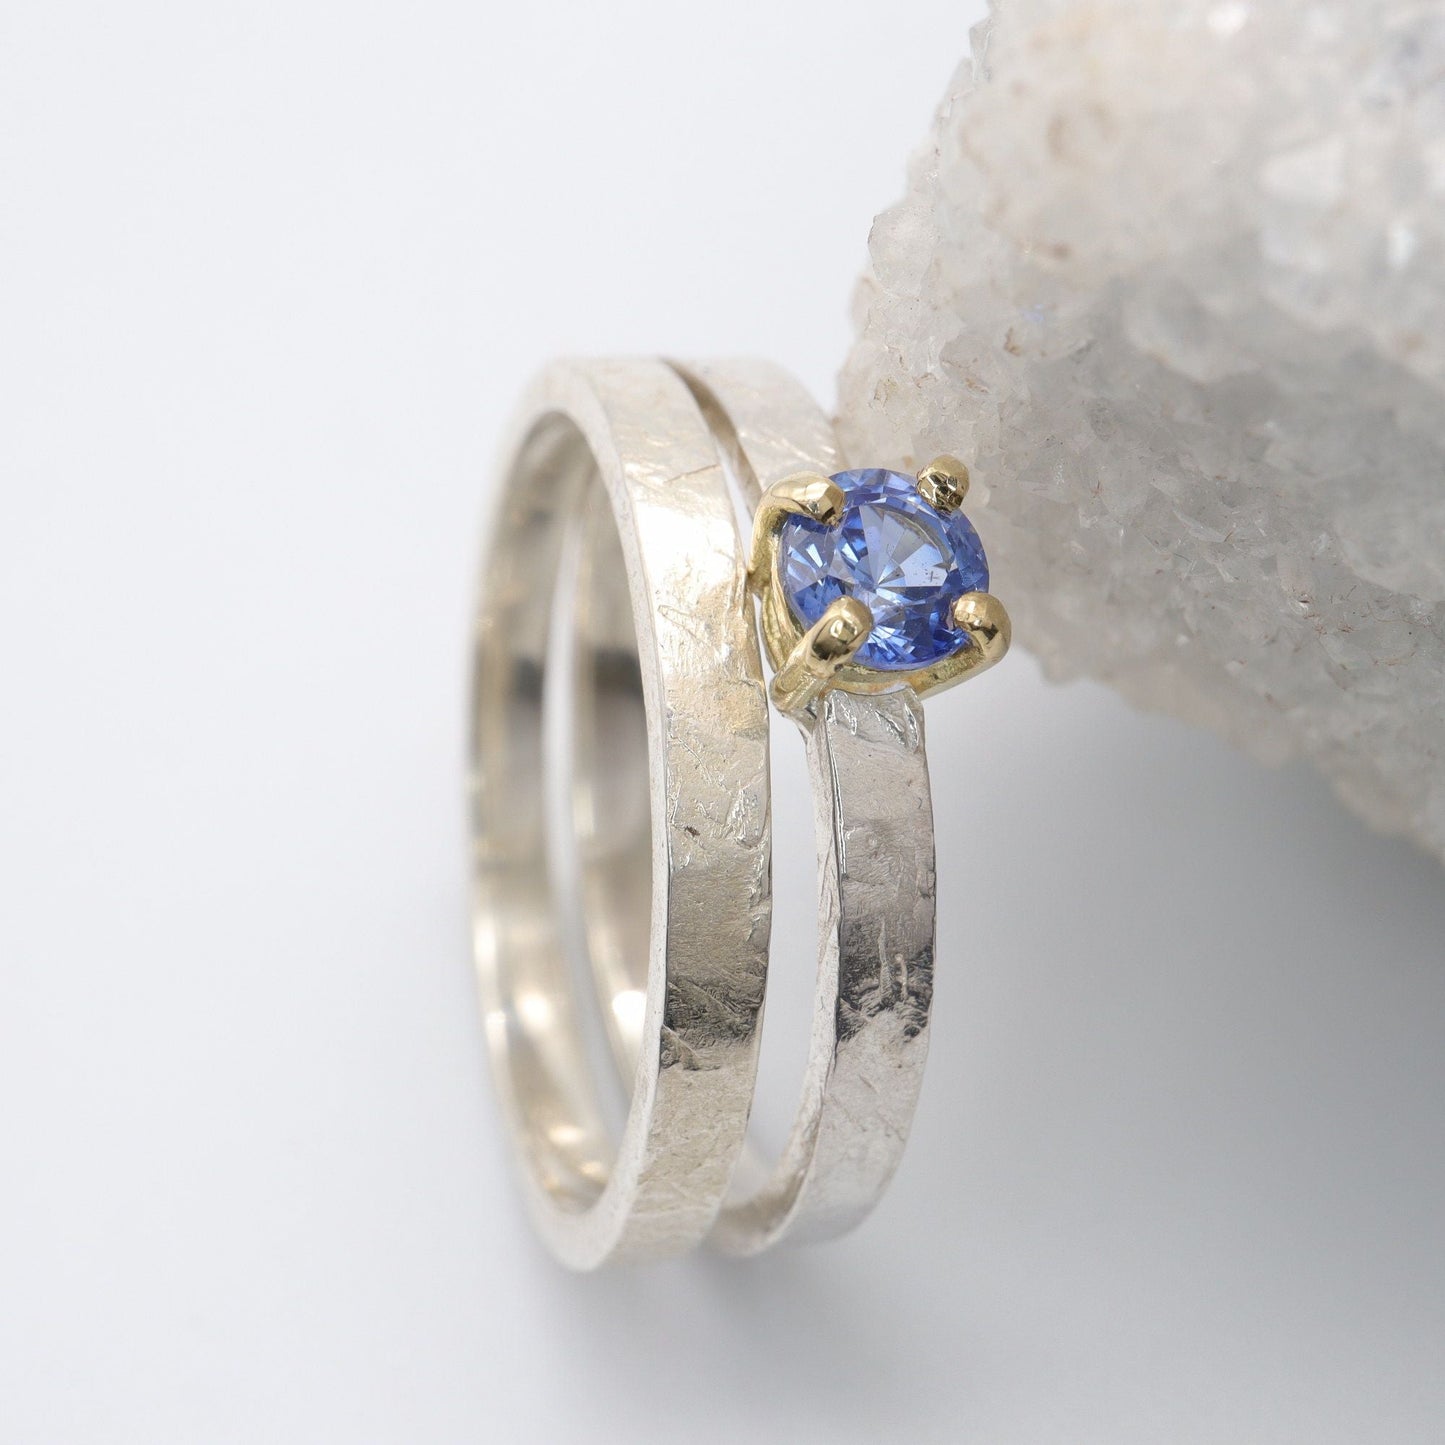 Sapphire gold wedding set, Windermere design in 2mm bands